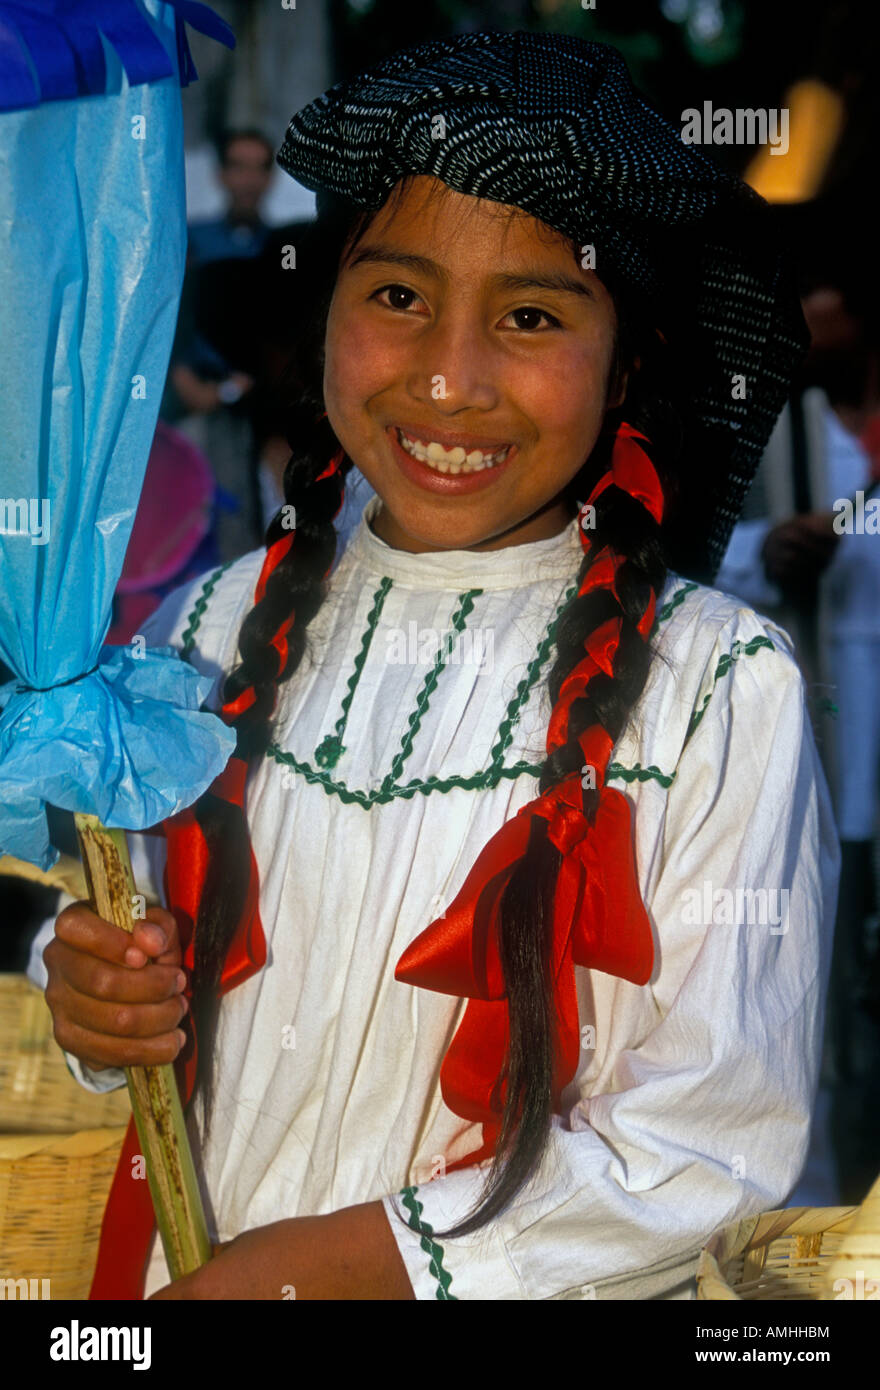 Mexican girl, young girl, eye contact, front view, portrait, Guelaguetza Festival, Oaxaca, Oaxaca de Juarez, Oaxaca State, Mexico Stock Photo